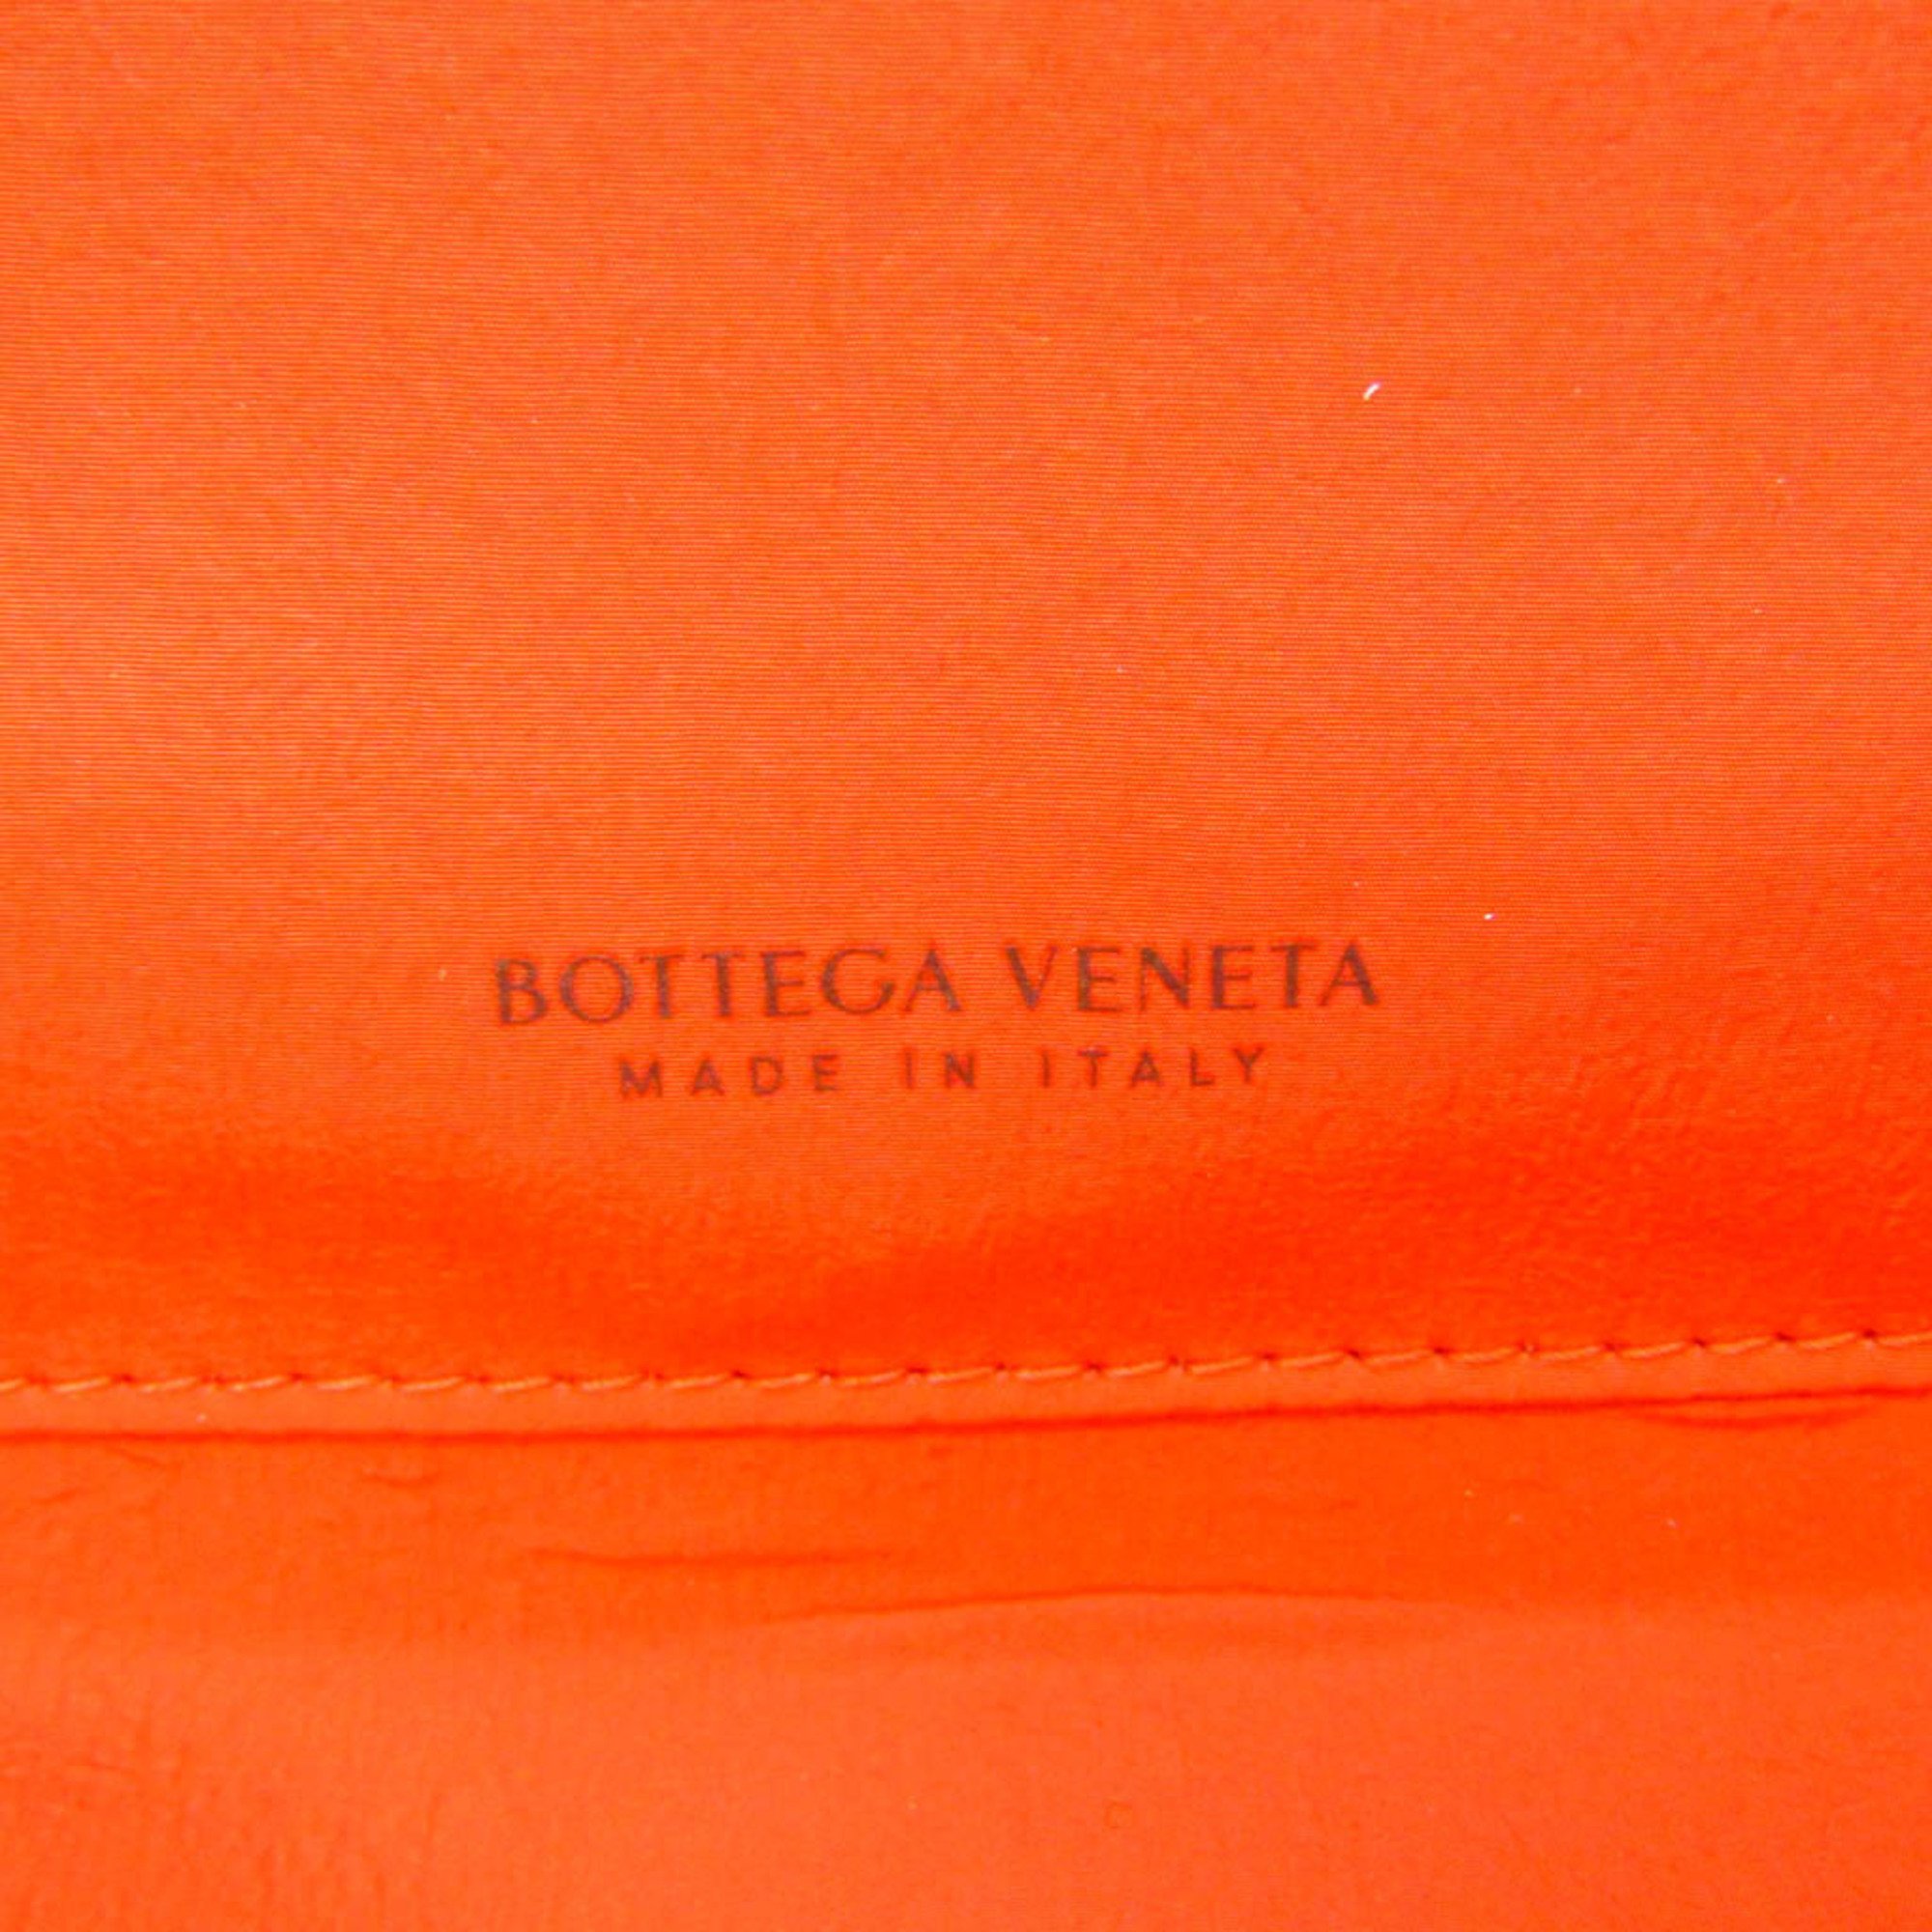 Bottega Veneta Organizer VA9V3 666770 Women's Leather Clutch Bag,Pouch Red Color